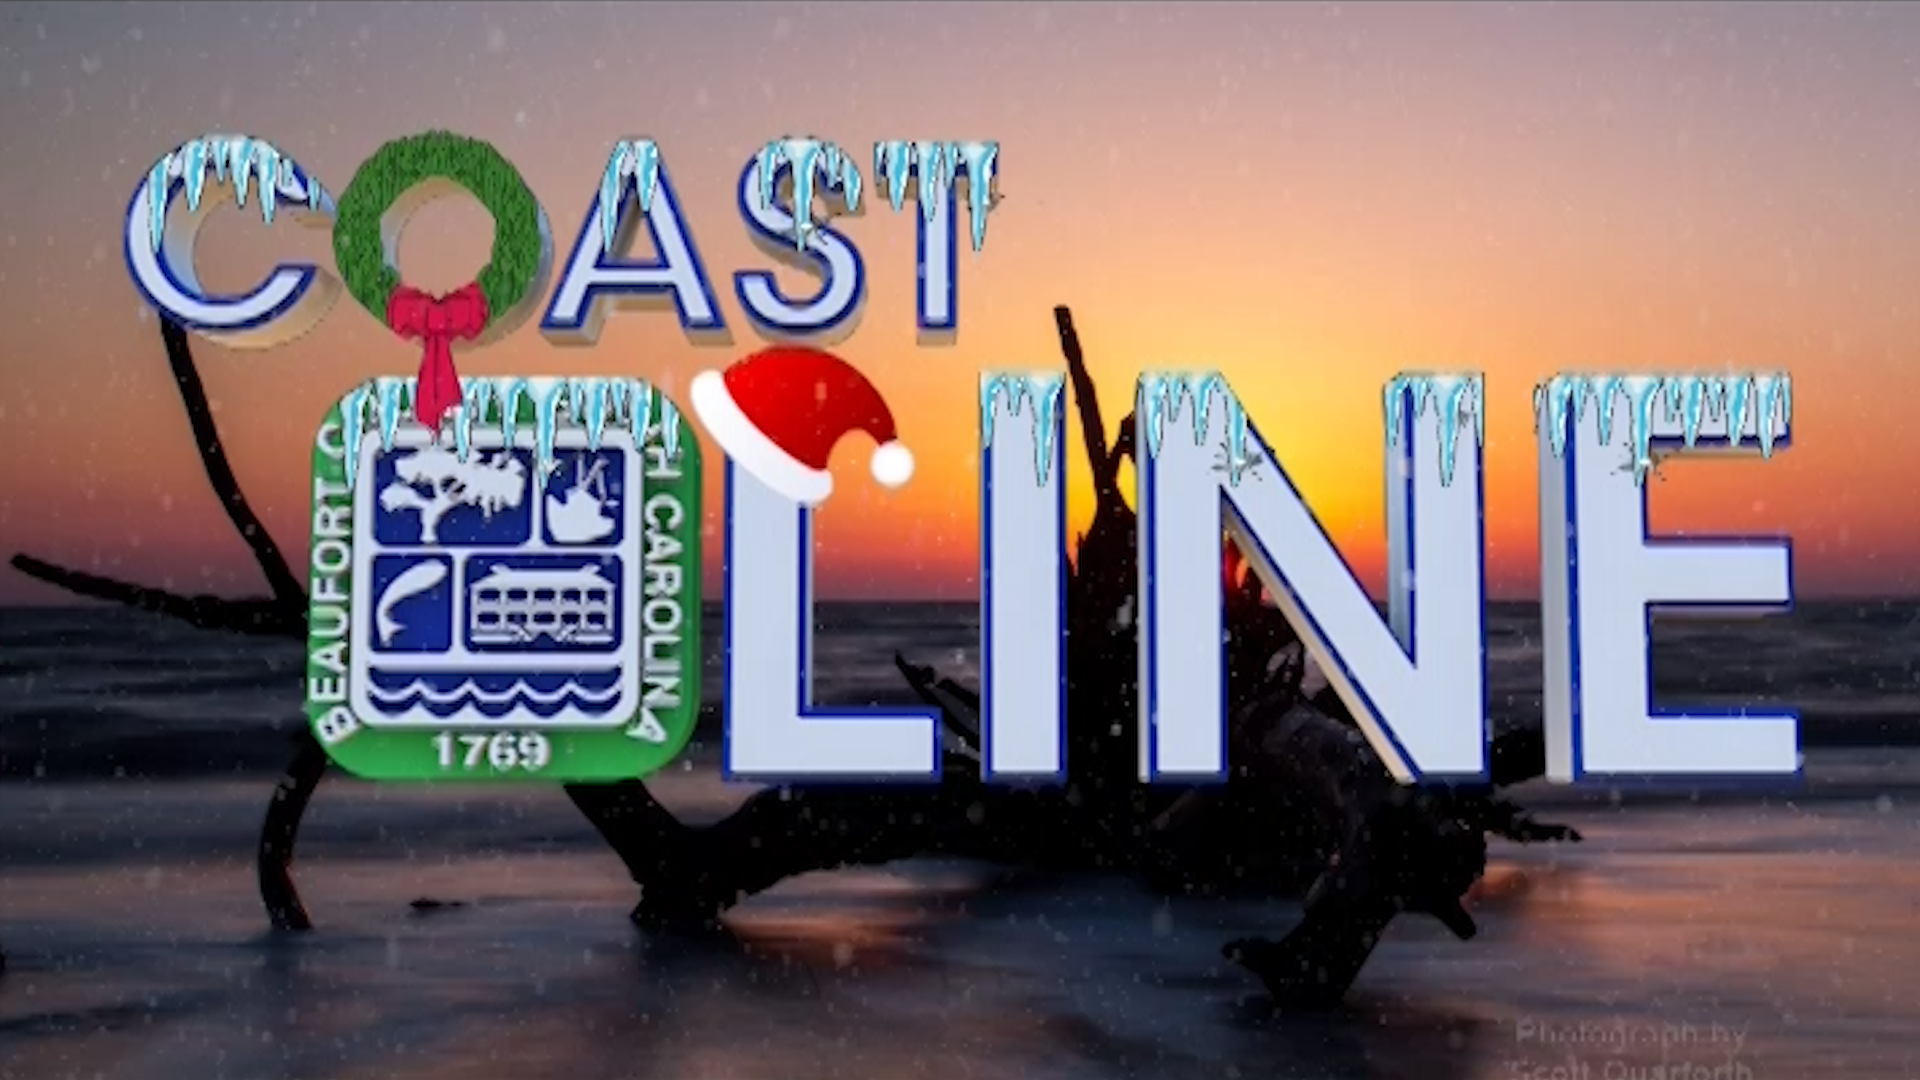 Coastline Holiday Episode Title Screen